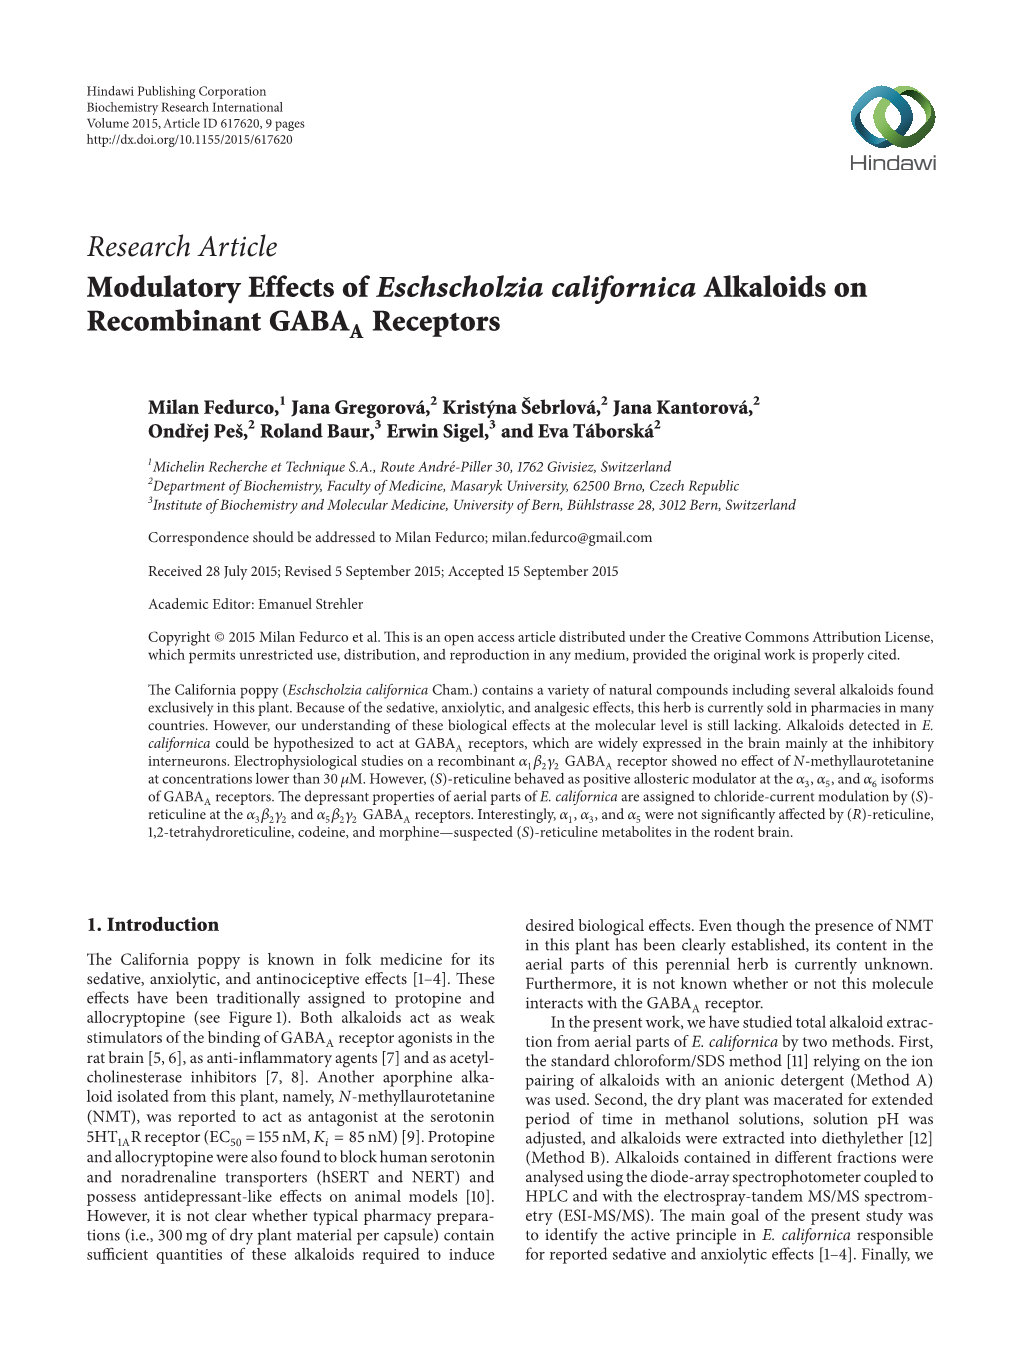 Modulatory Effects of Eschscholzia Californica Alkaloids on Recombinant GABAA Receptors